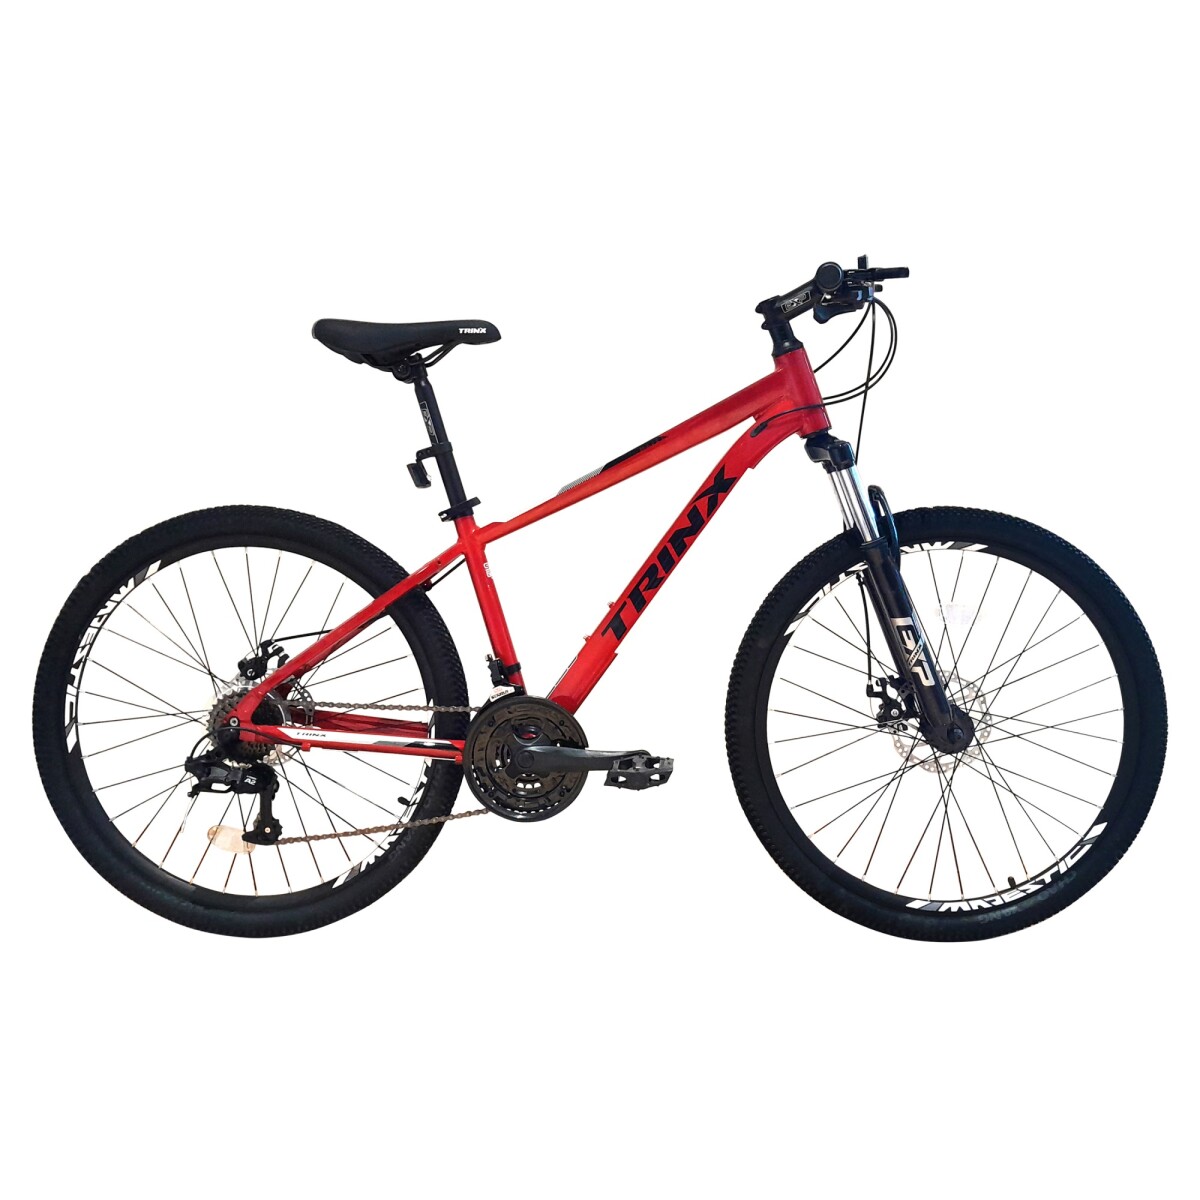 BICICLETA TRINX M100 ROJO/NEGRO/BLANCO - Bicicleta Trinx M100 Rojo/negro/blanco 